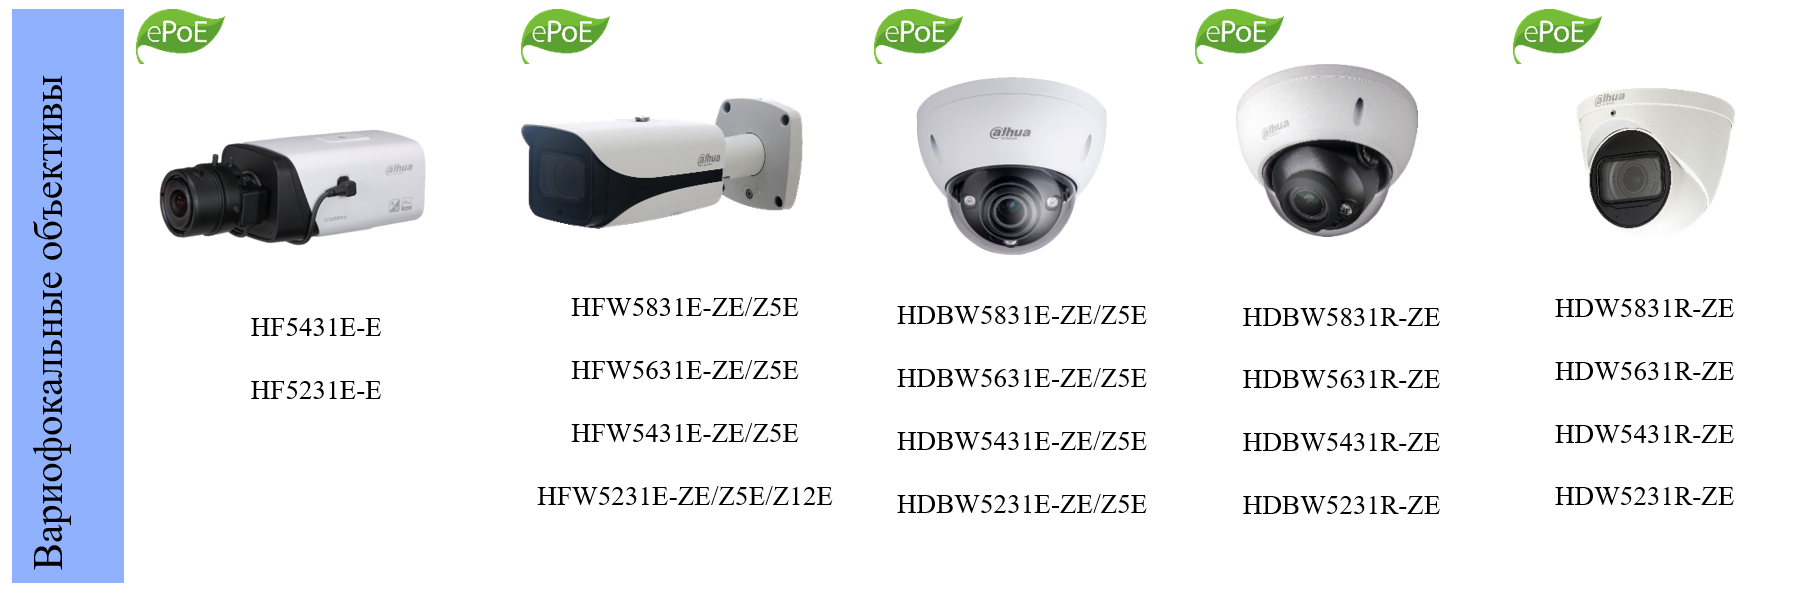 Сетевые камеры Dahua серии ePoE